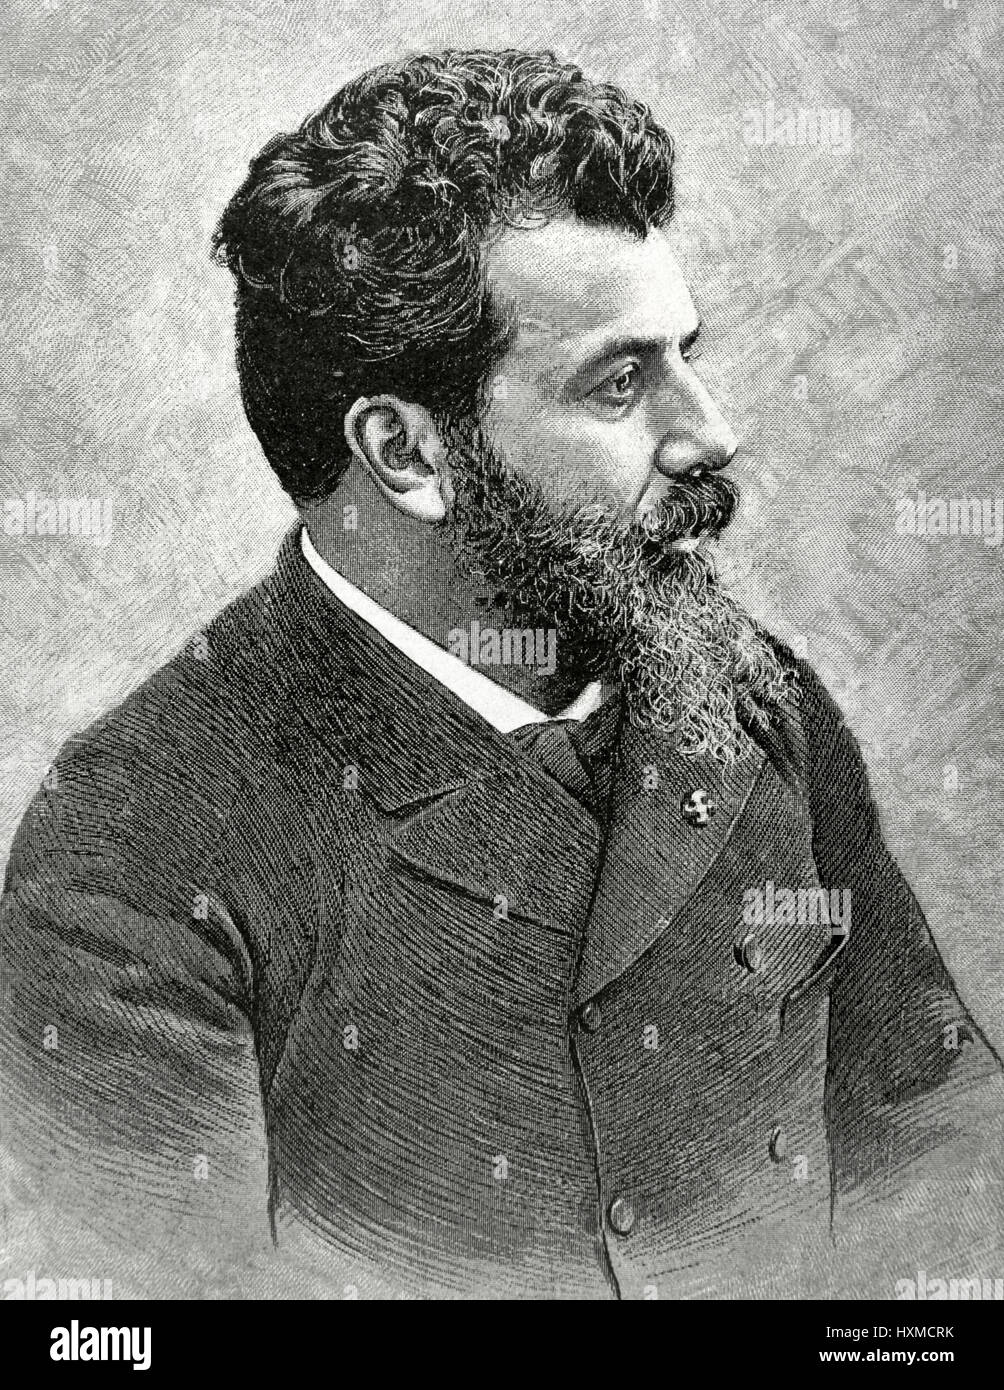 Francisco Domingo Marques (1842-1920). Spanish painter. Eclictic style. Portrait. Engraving. 'La Ilustracion Iberica', 1888. Stock Photo